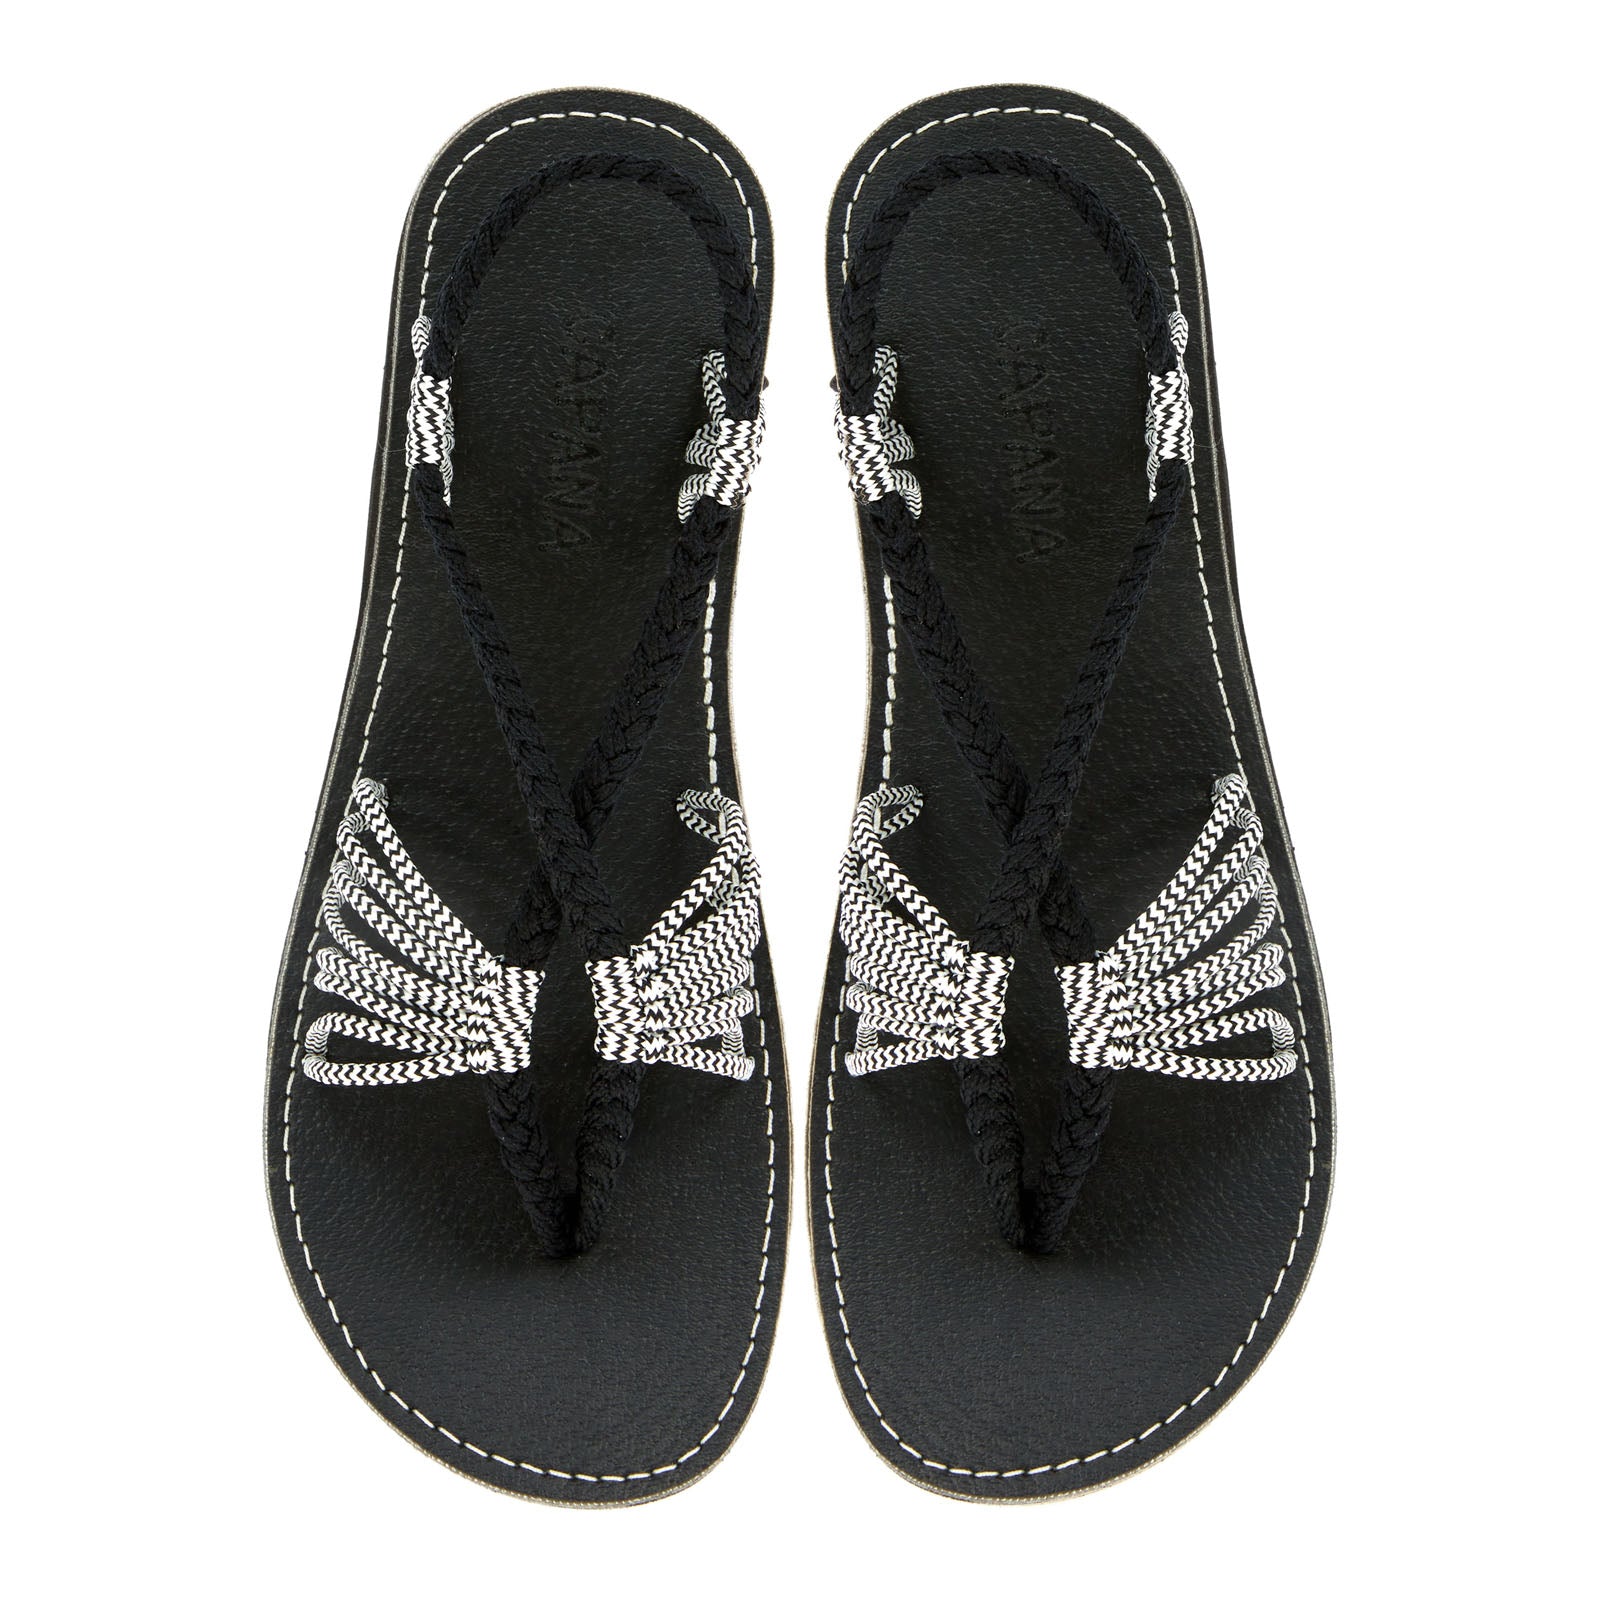 Cocoon Black Zebra Rope Sandals Black White thong design Flat sandals for women